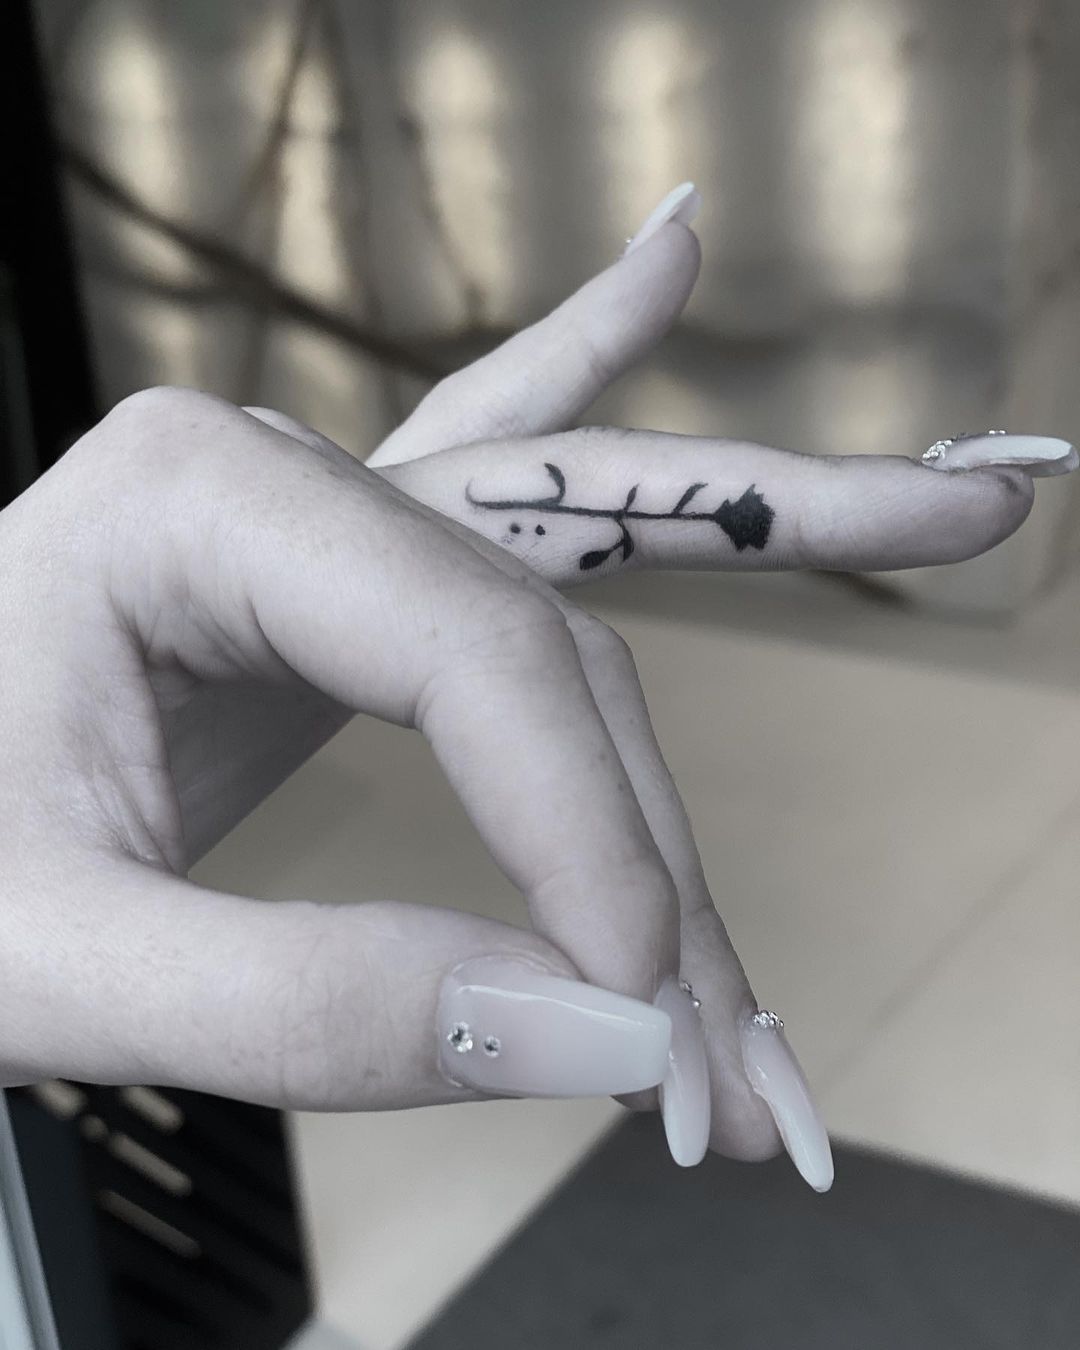 small tattoo for thumb - Pearl Lemon Tattoos